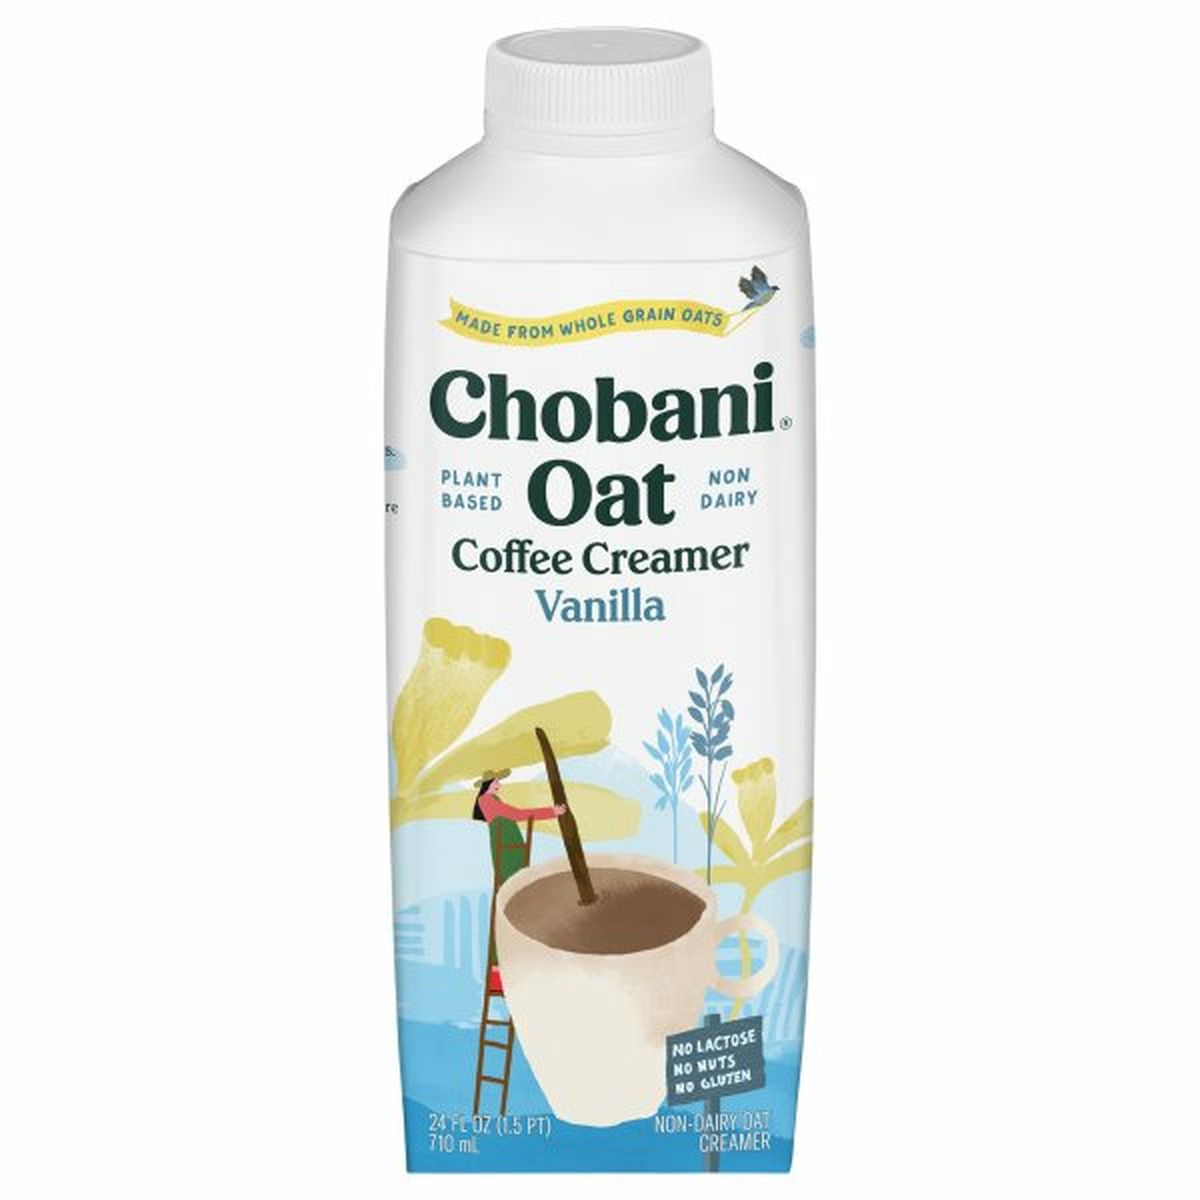 Calories in Chobani Coffee Creamer, Oat, Vanilla